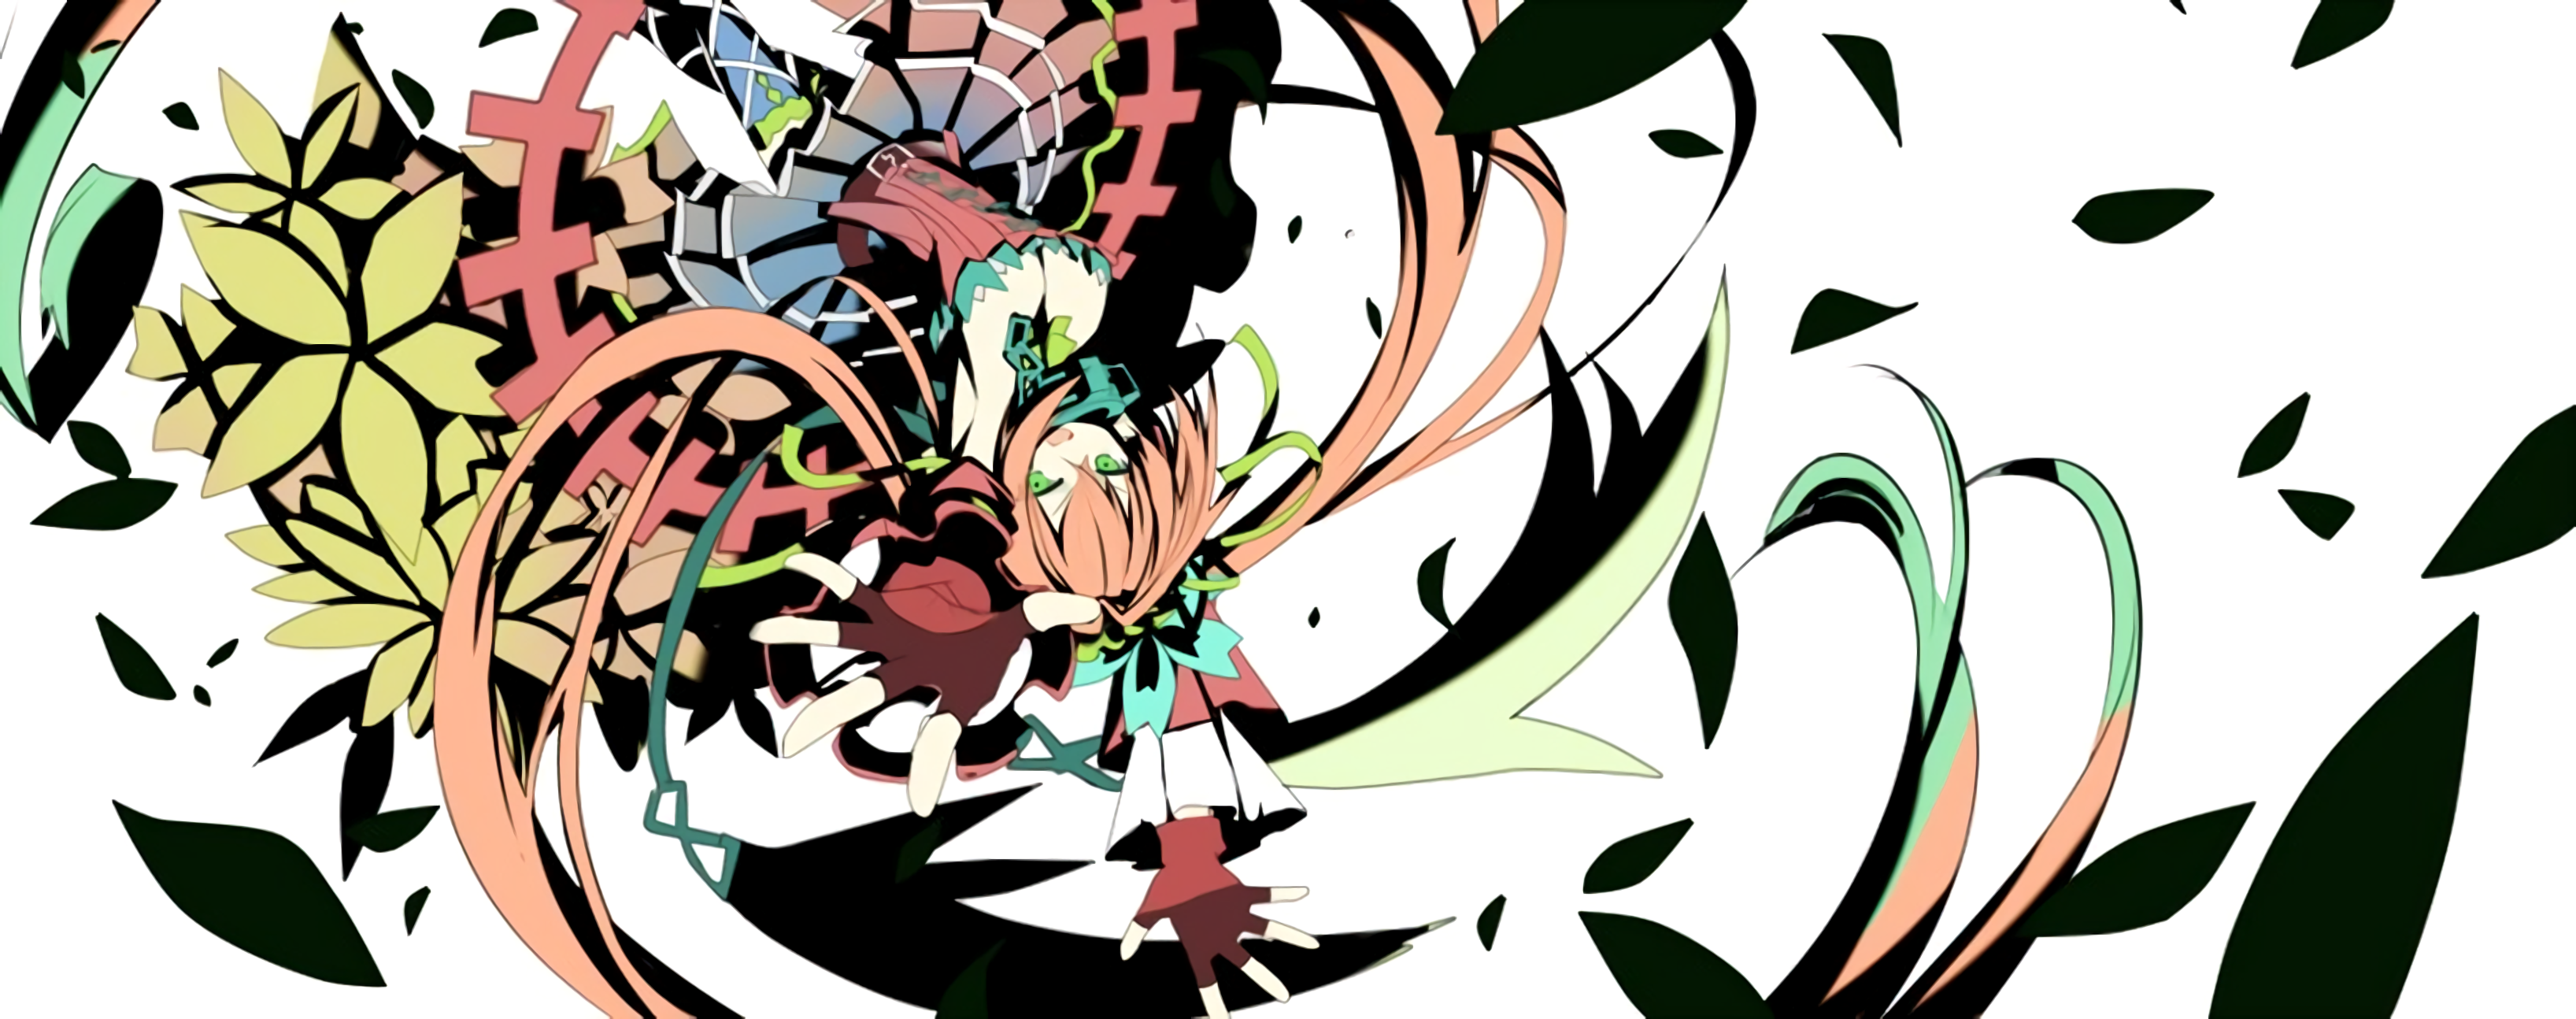 Anime Clockwork Planet HD Wallpaper | Background Image